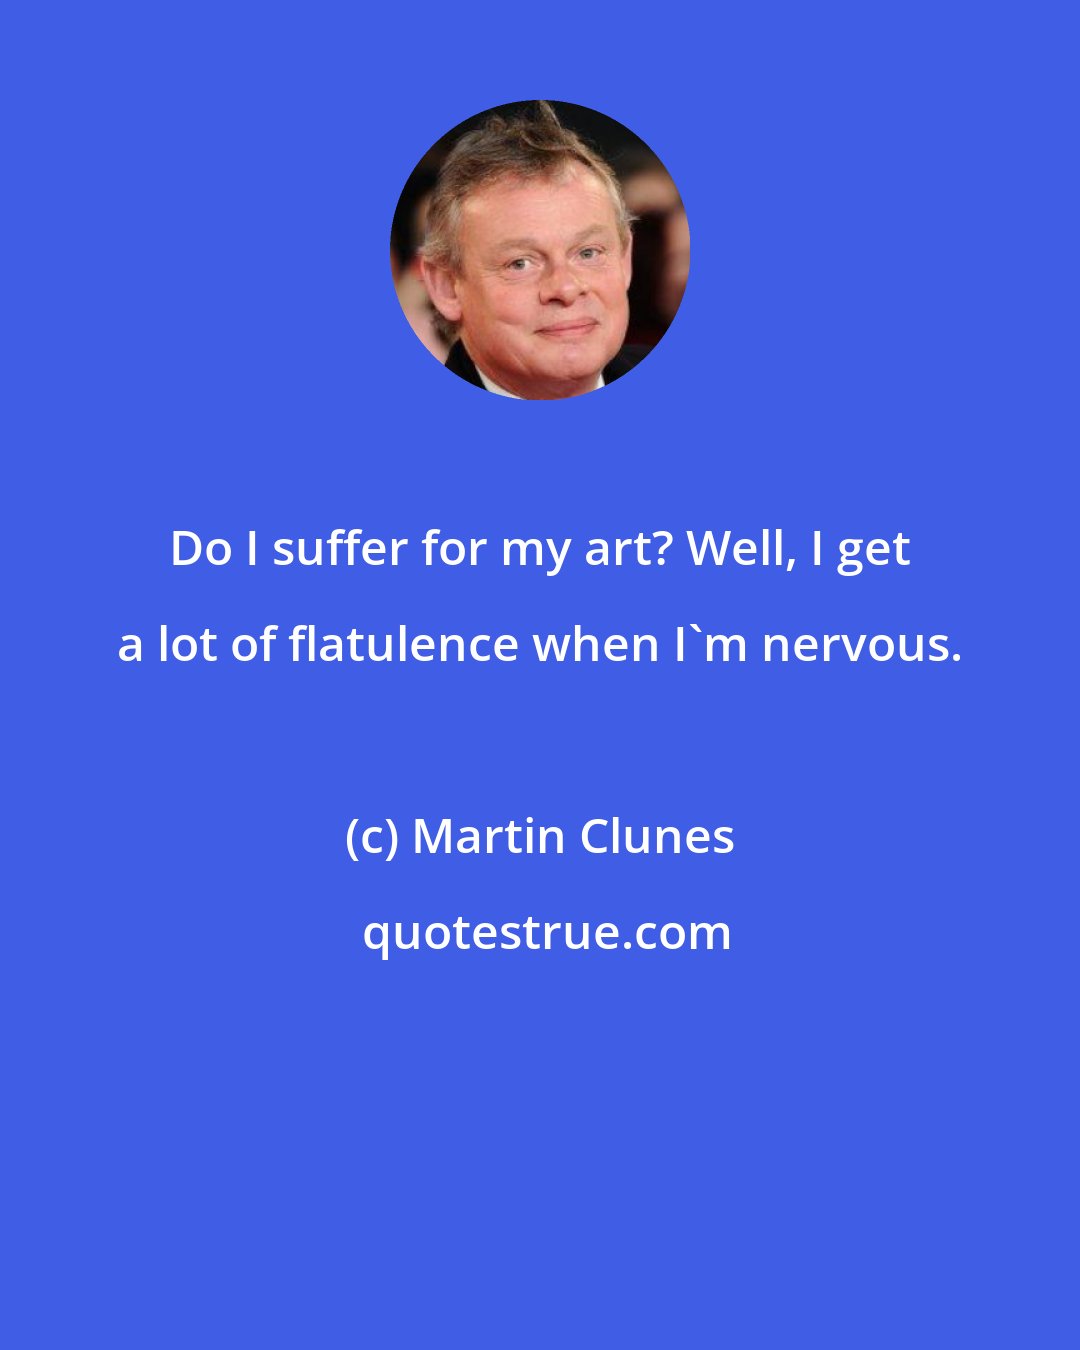 Martin Clunes: Do I suffer for my art? Well, I get a lot of flatulence when I'm nervous.